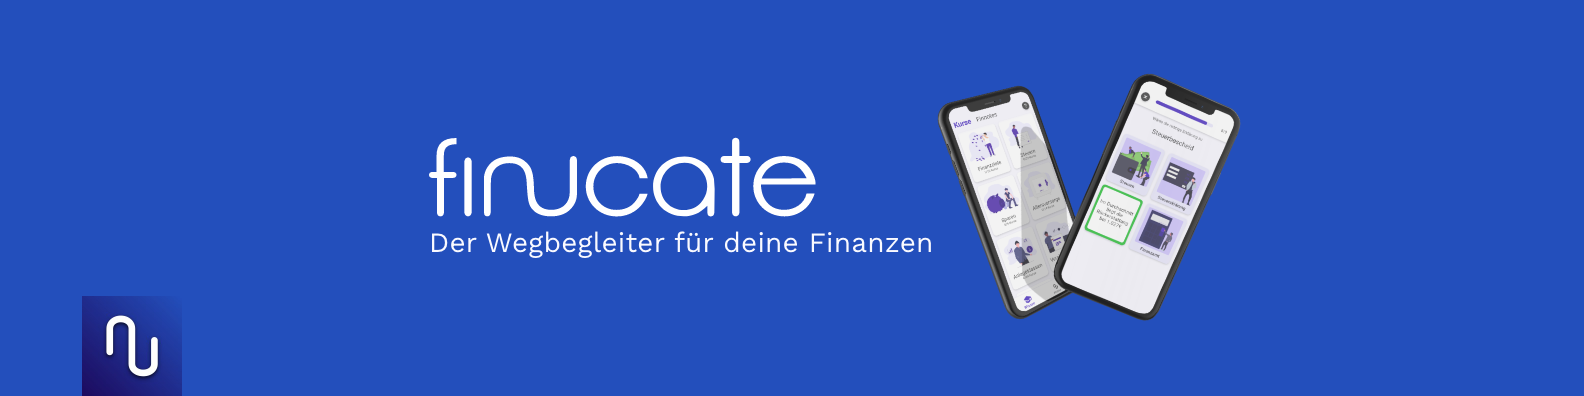 Finucate / startup from Pforzheim / Background